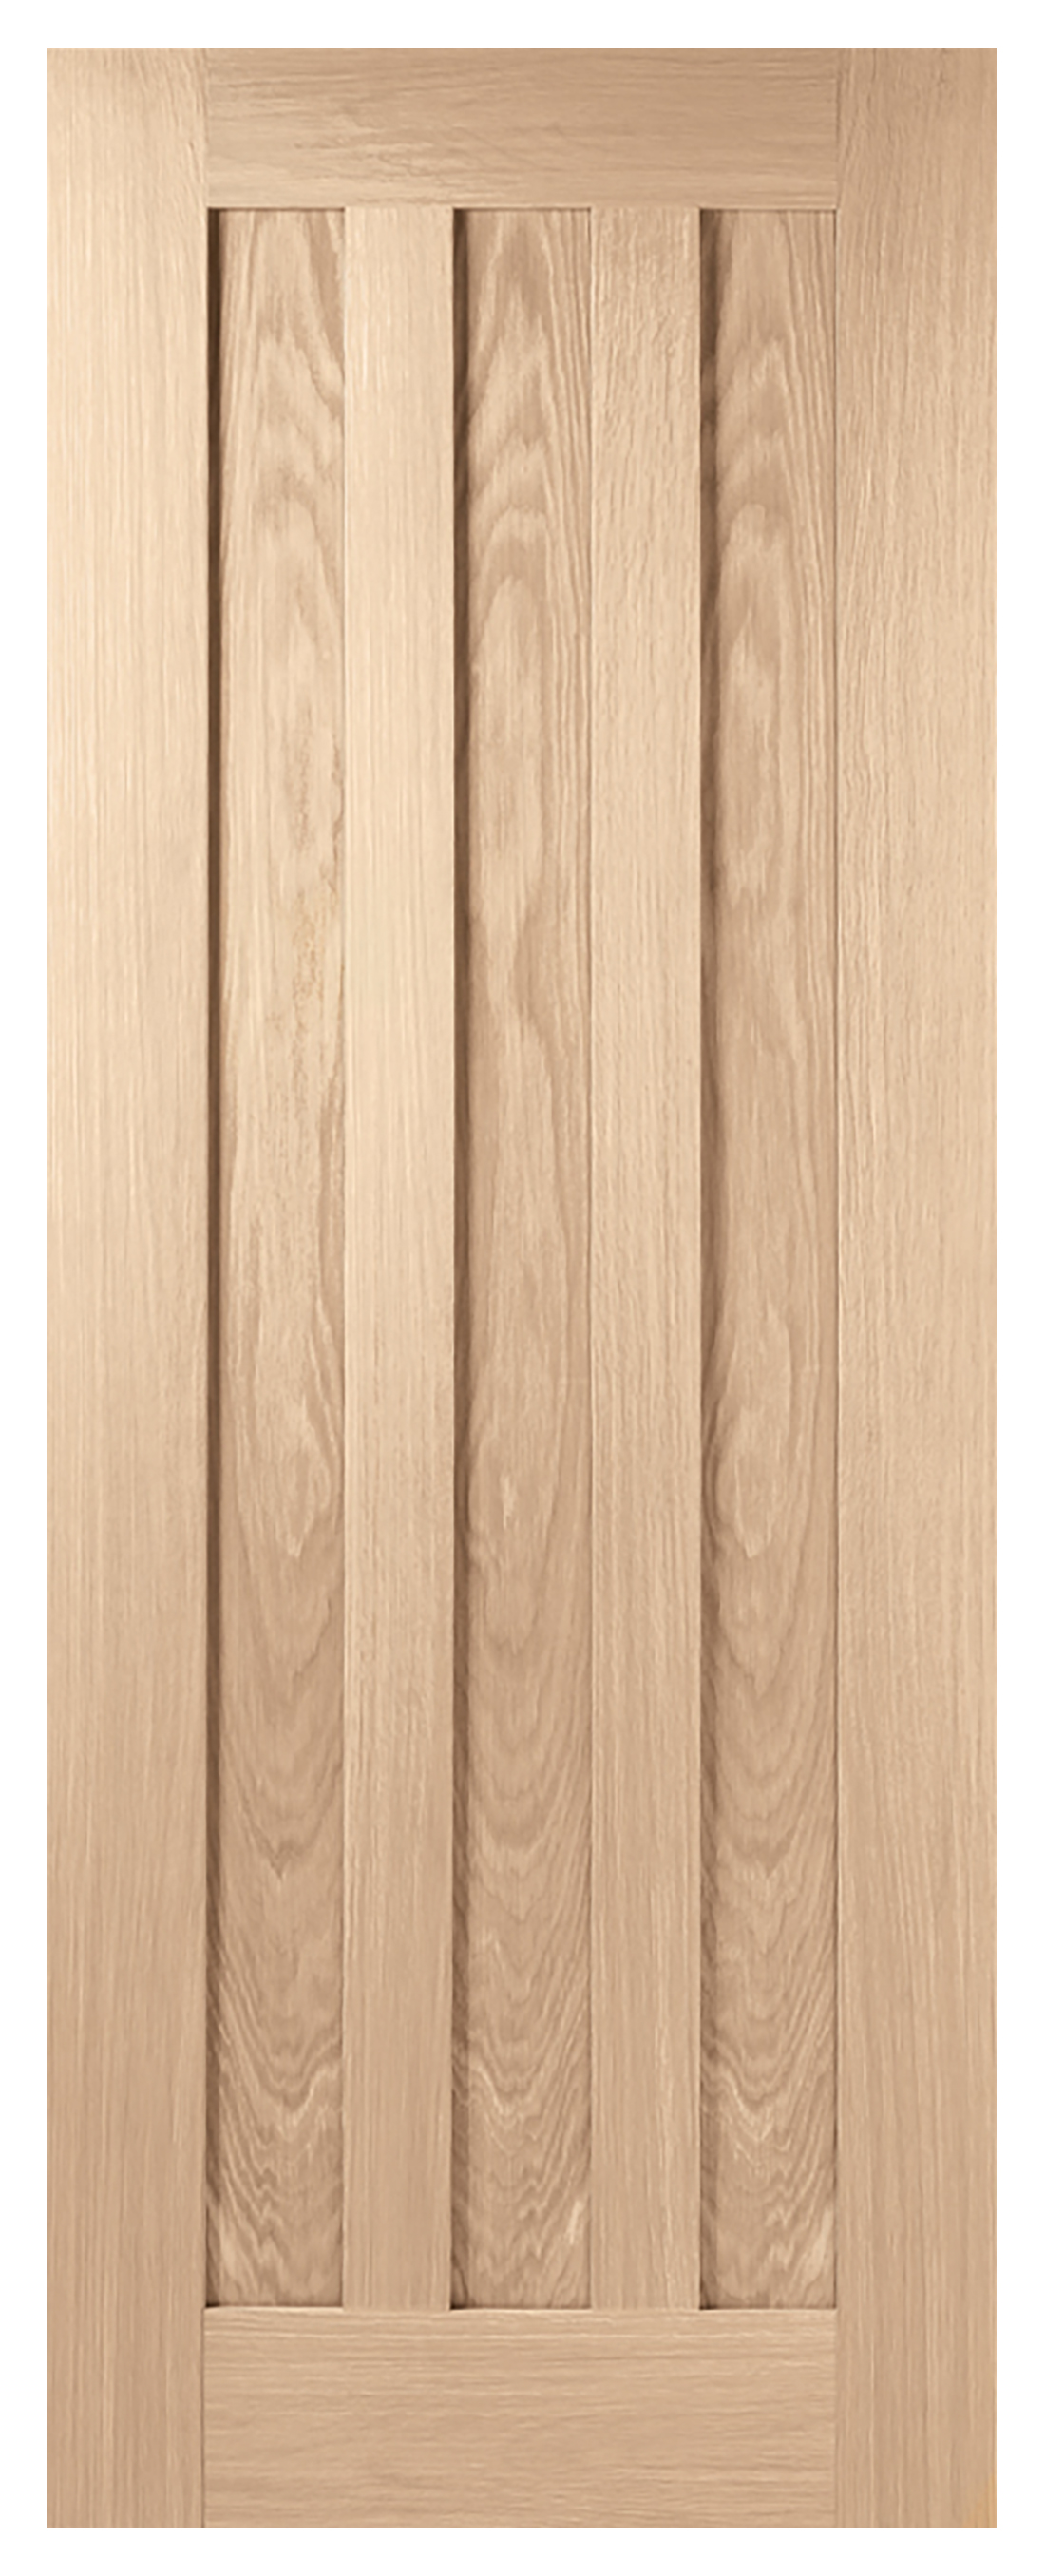 Image of LPD Internal Idaho 3 Panel Unfinished Oak Solid Core Door - 726 x 2040mm